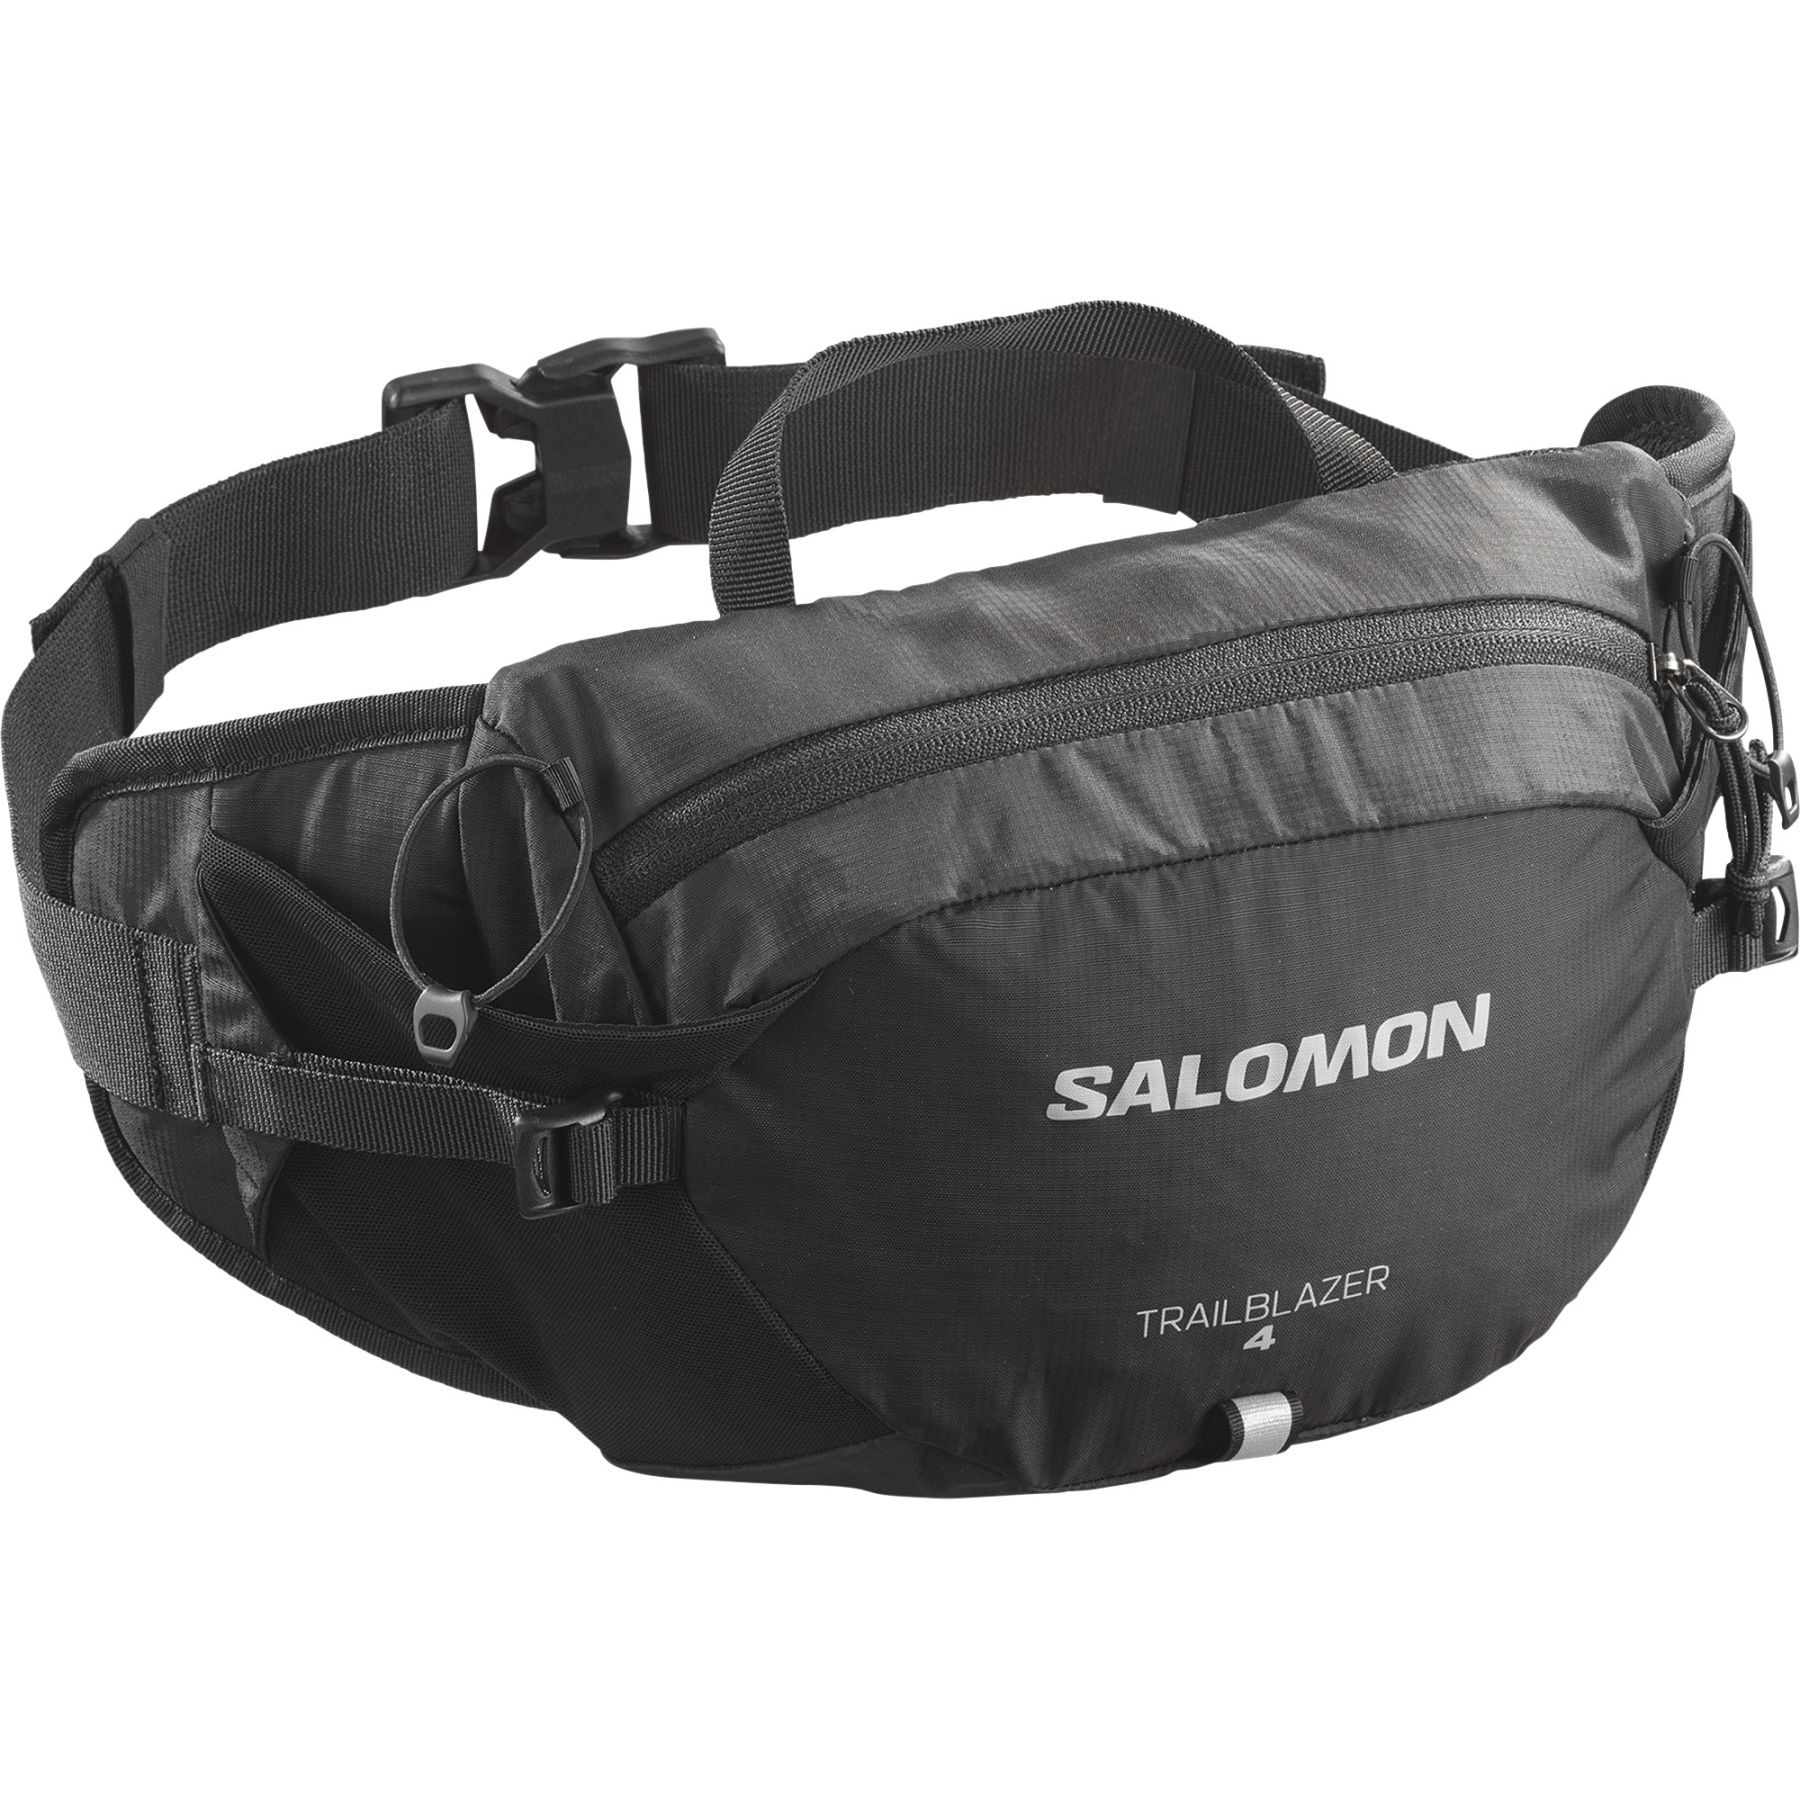 Se Salomon Trailblazer Belt, bæltetaske, sort hos AktivVinter.dk